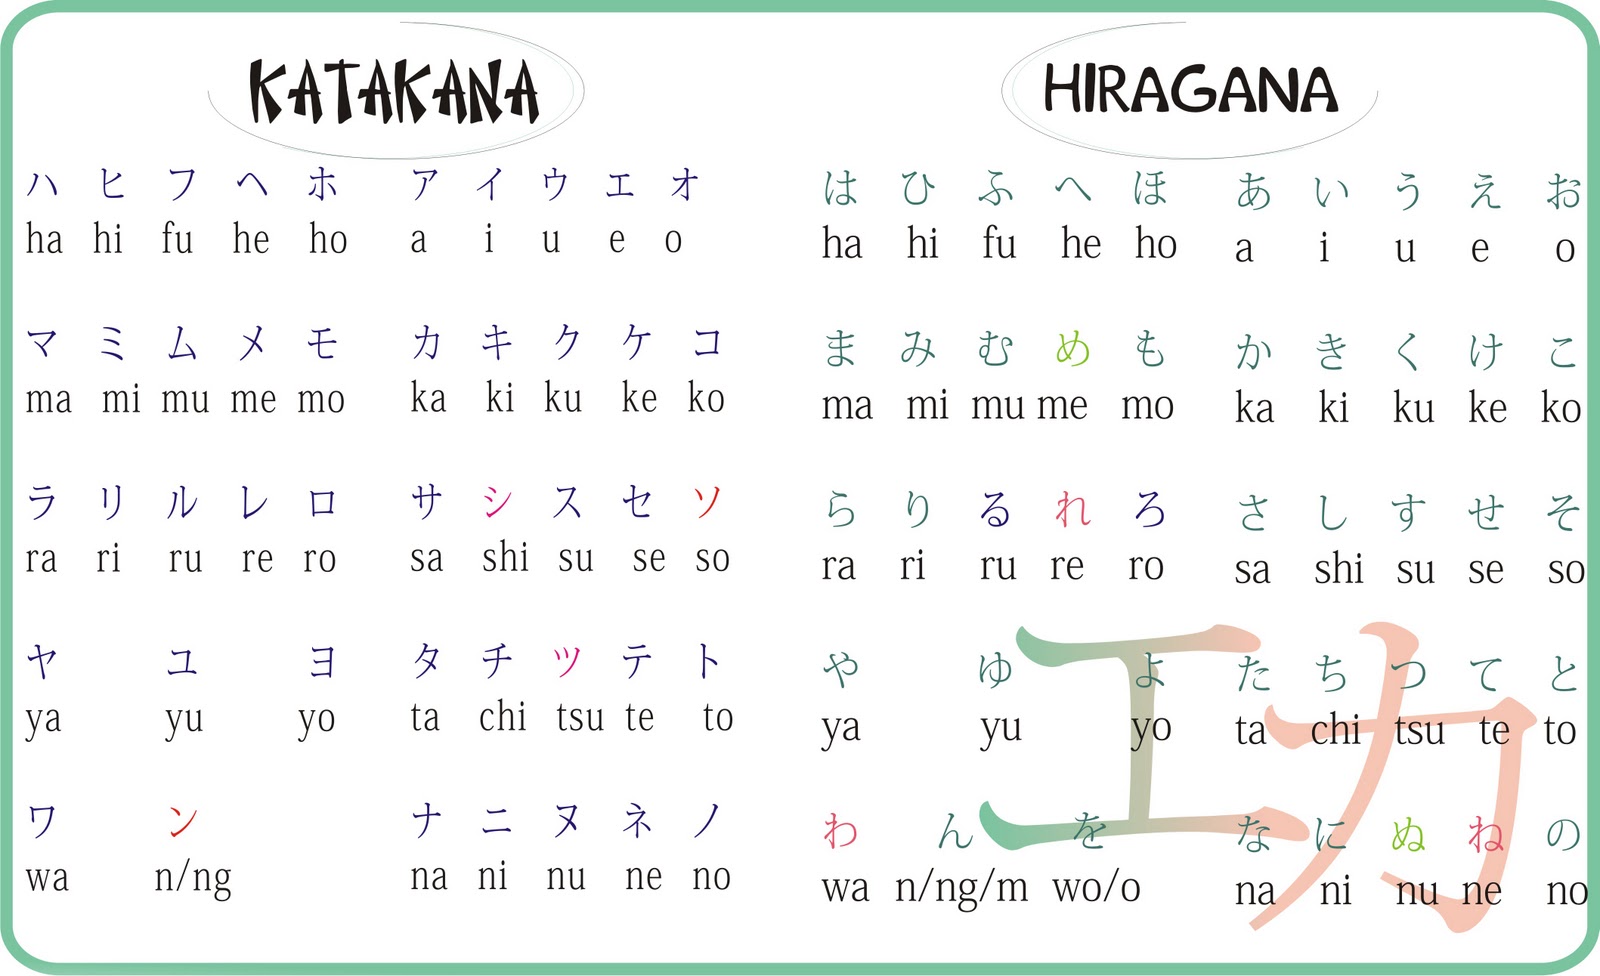 Belajar Bahasa Jepang "Latihan Penulisan Huruf Hiragana & Katakana"